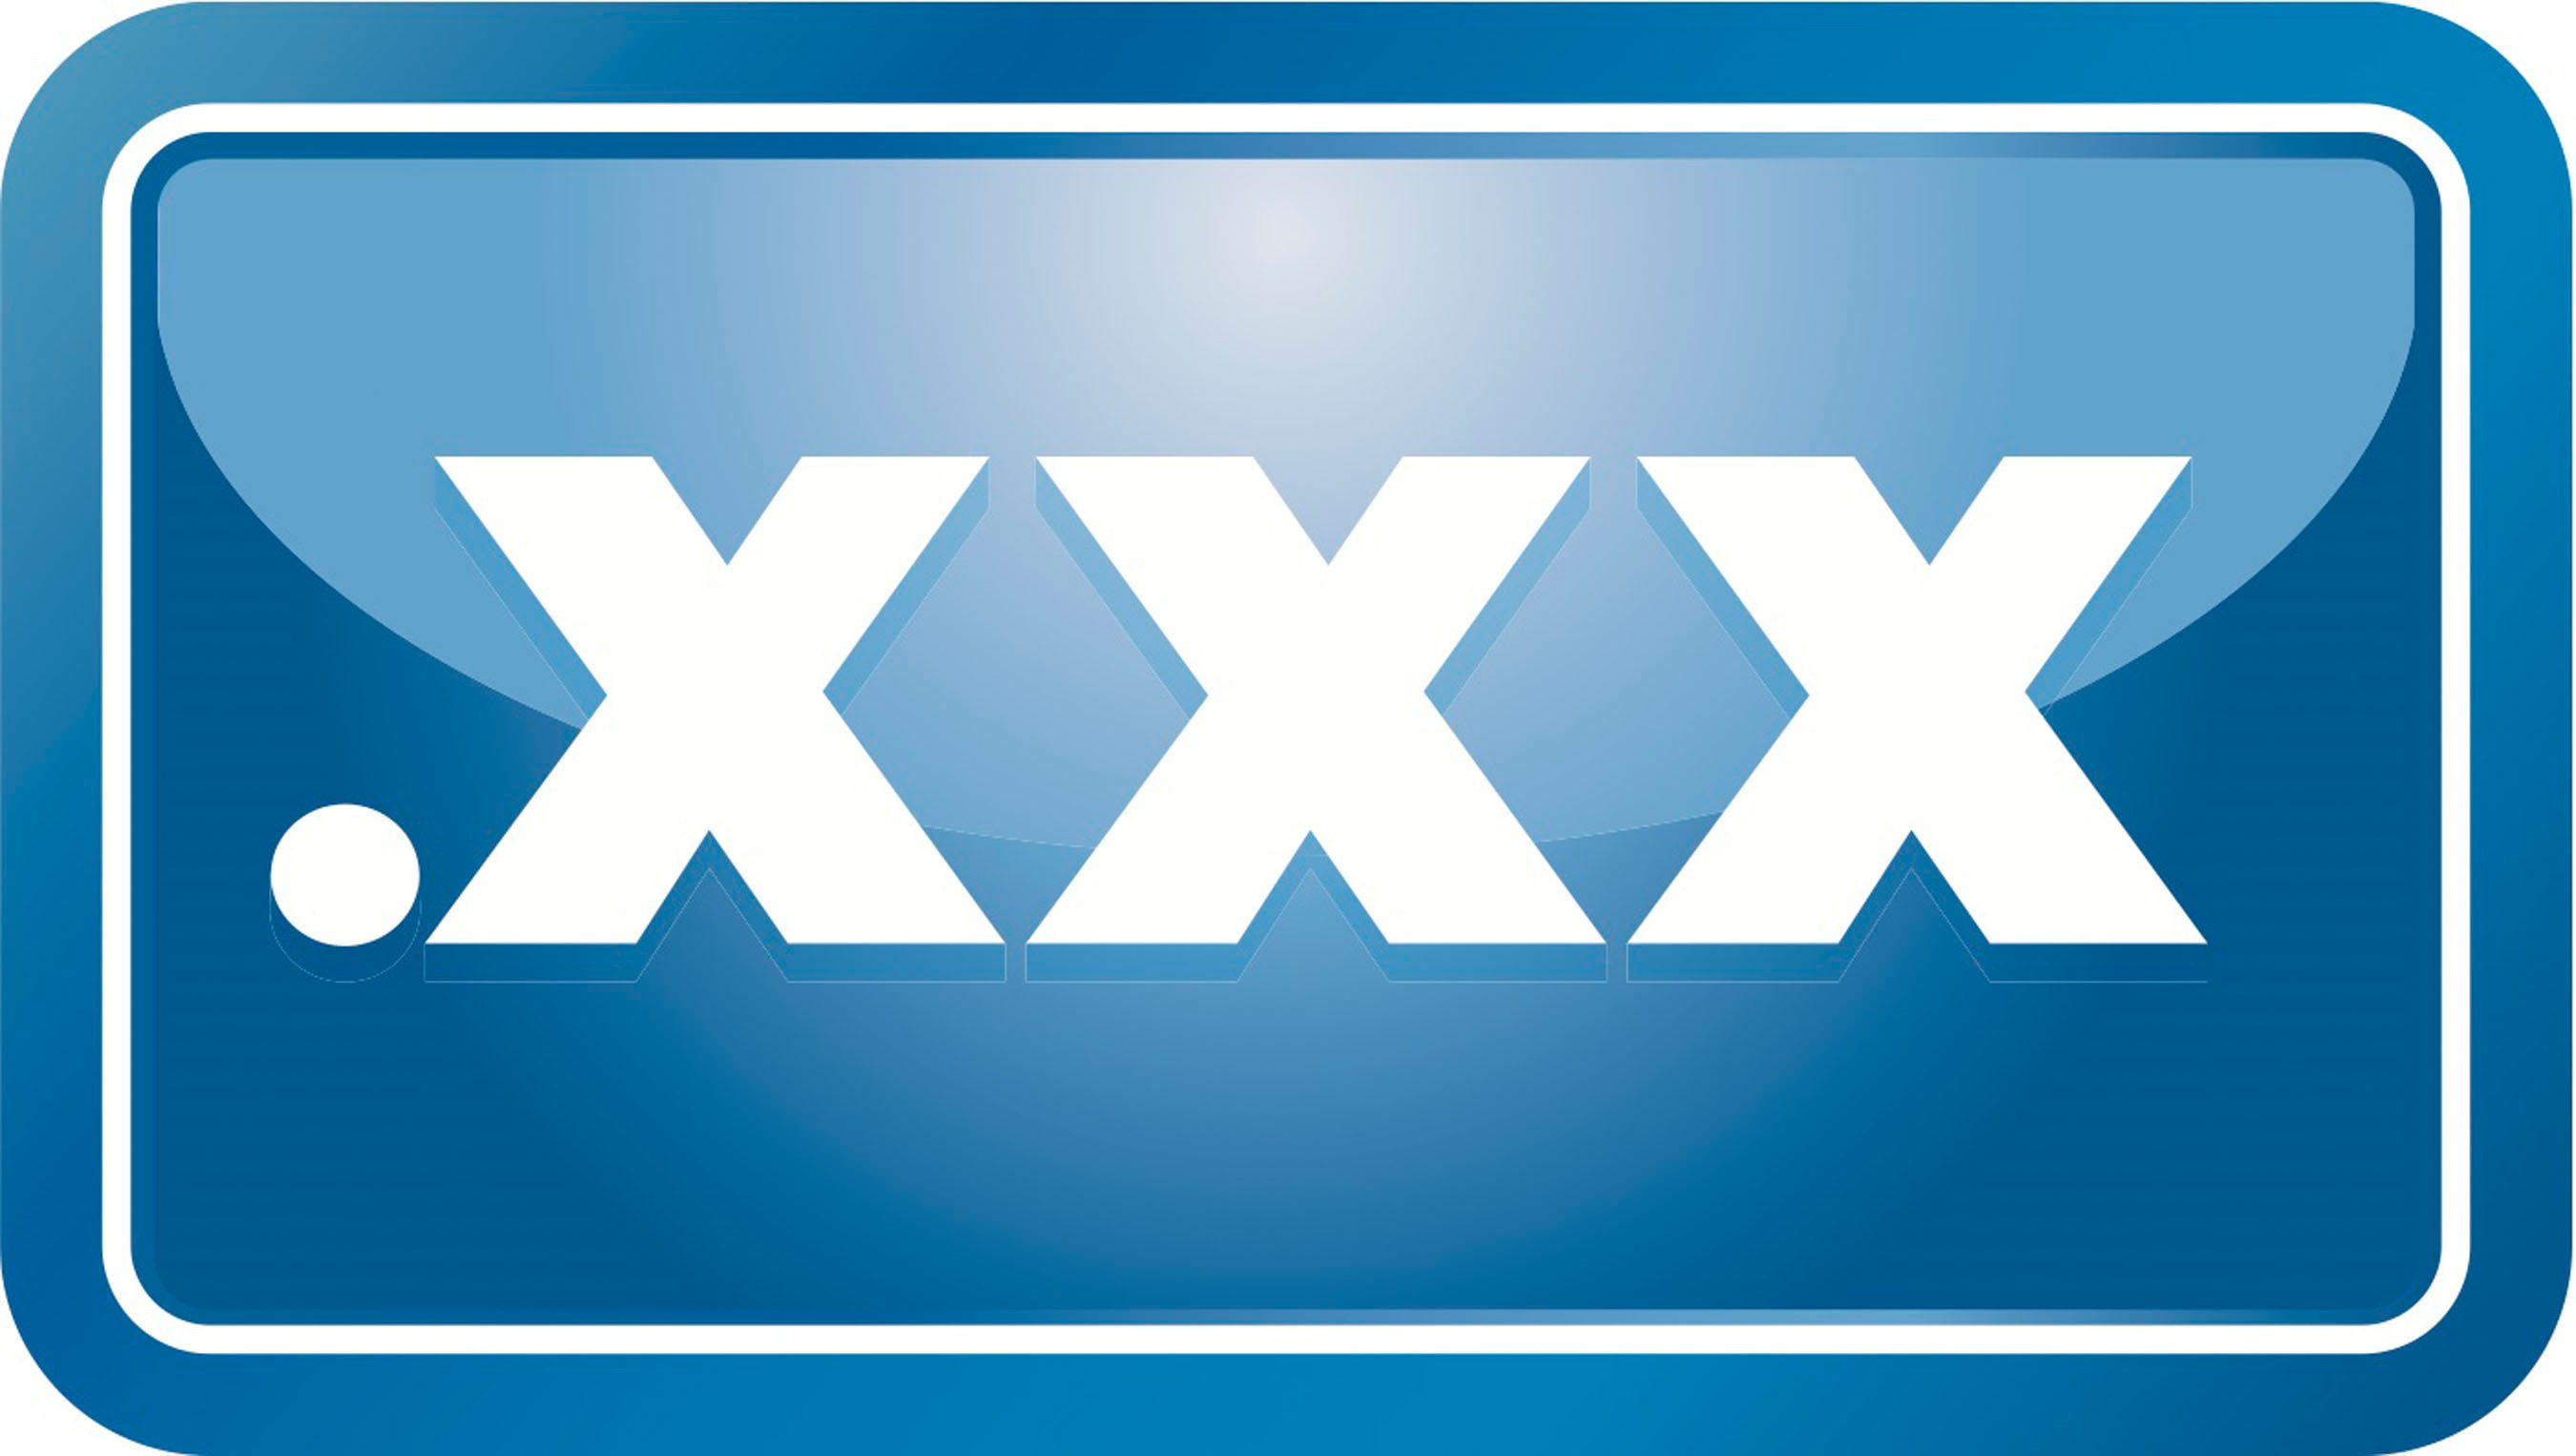 Xxx domain names list in english